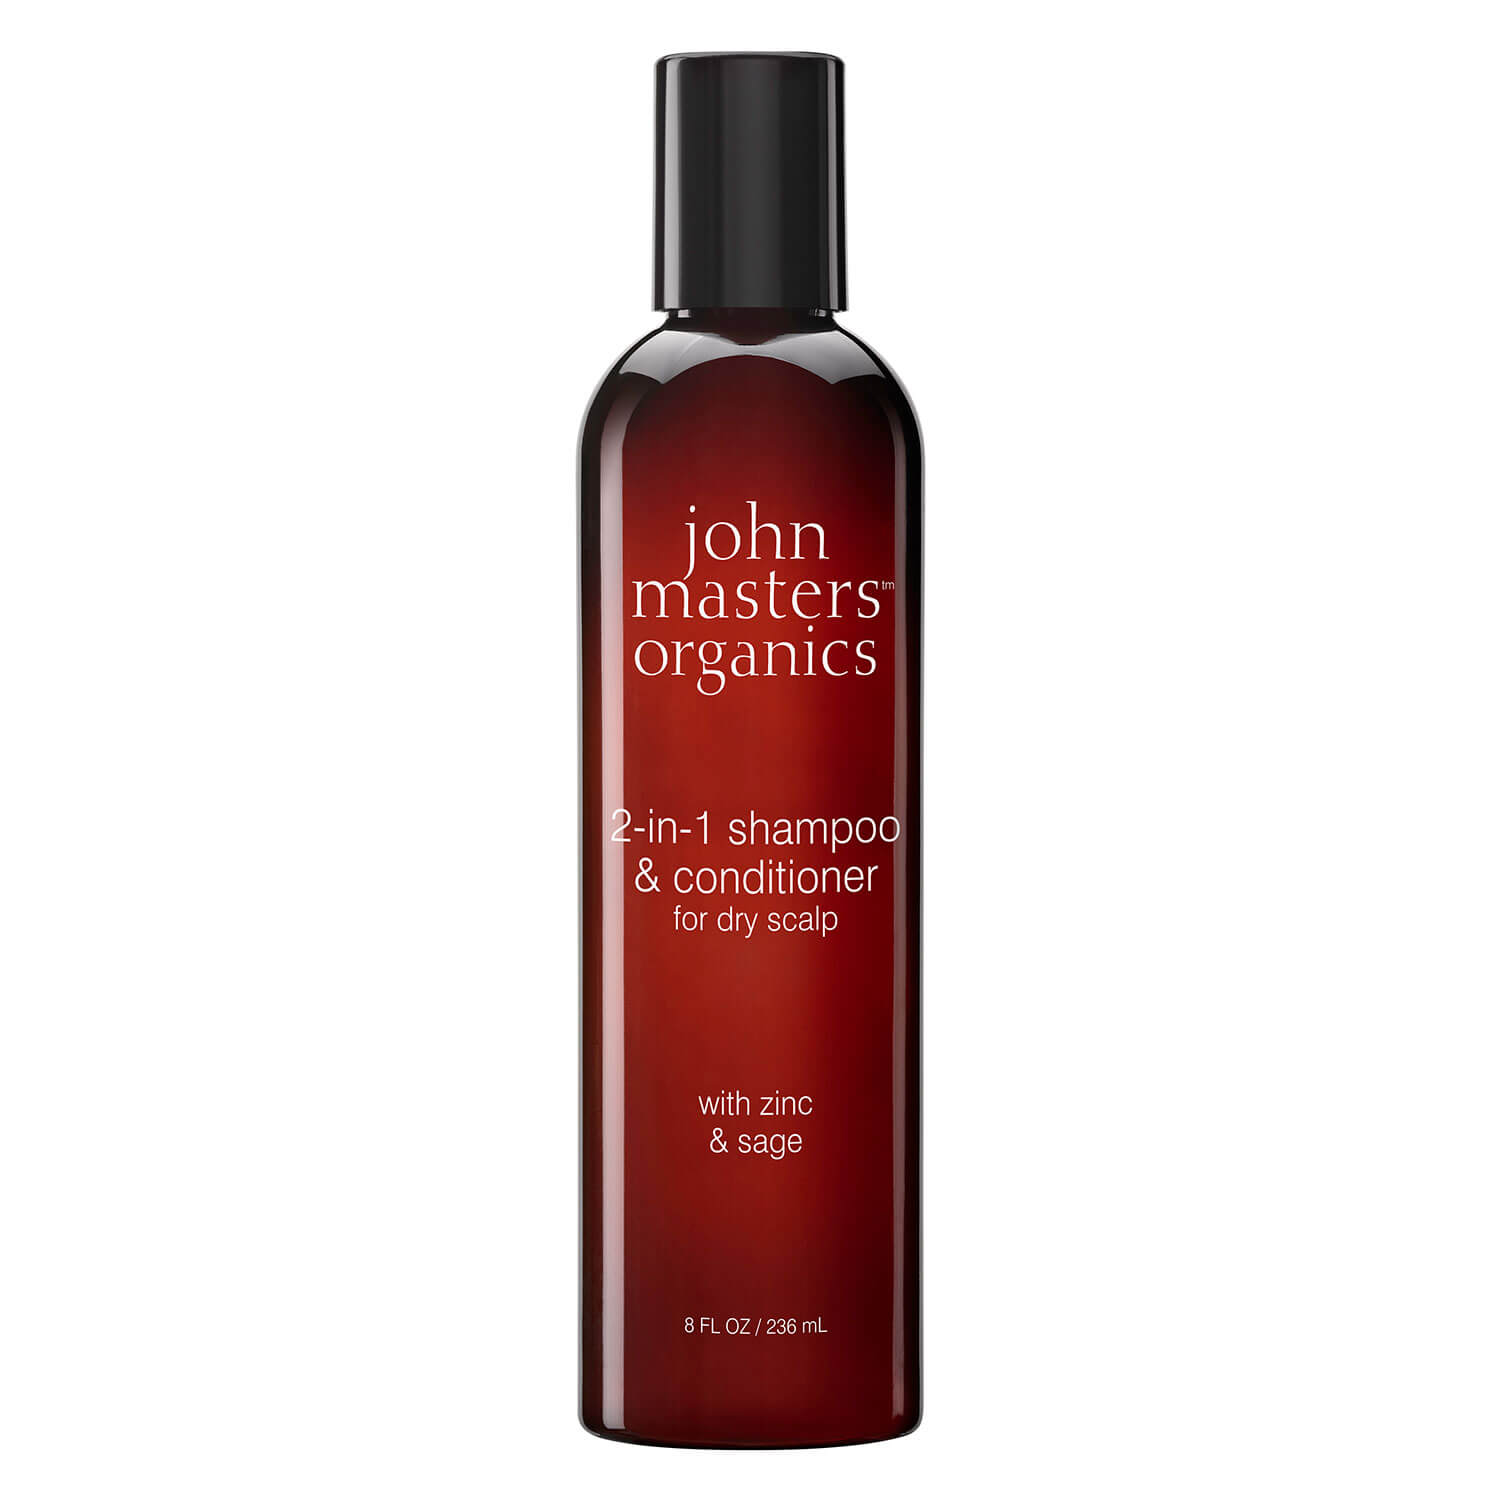 John Masters Organics Zinc & Sage Shampoo and Conditioner 